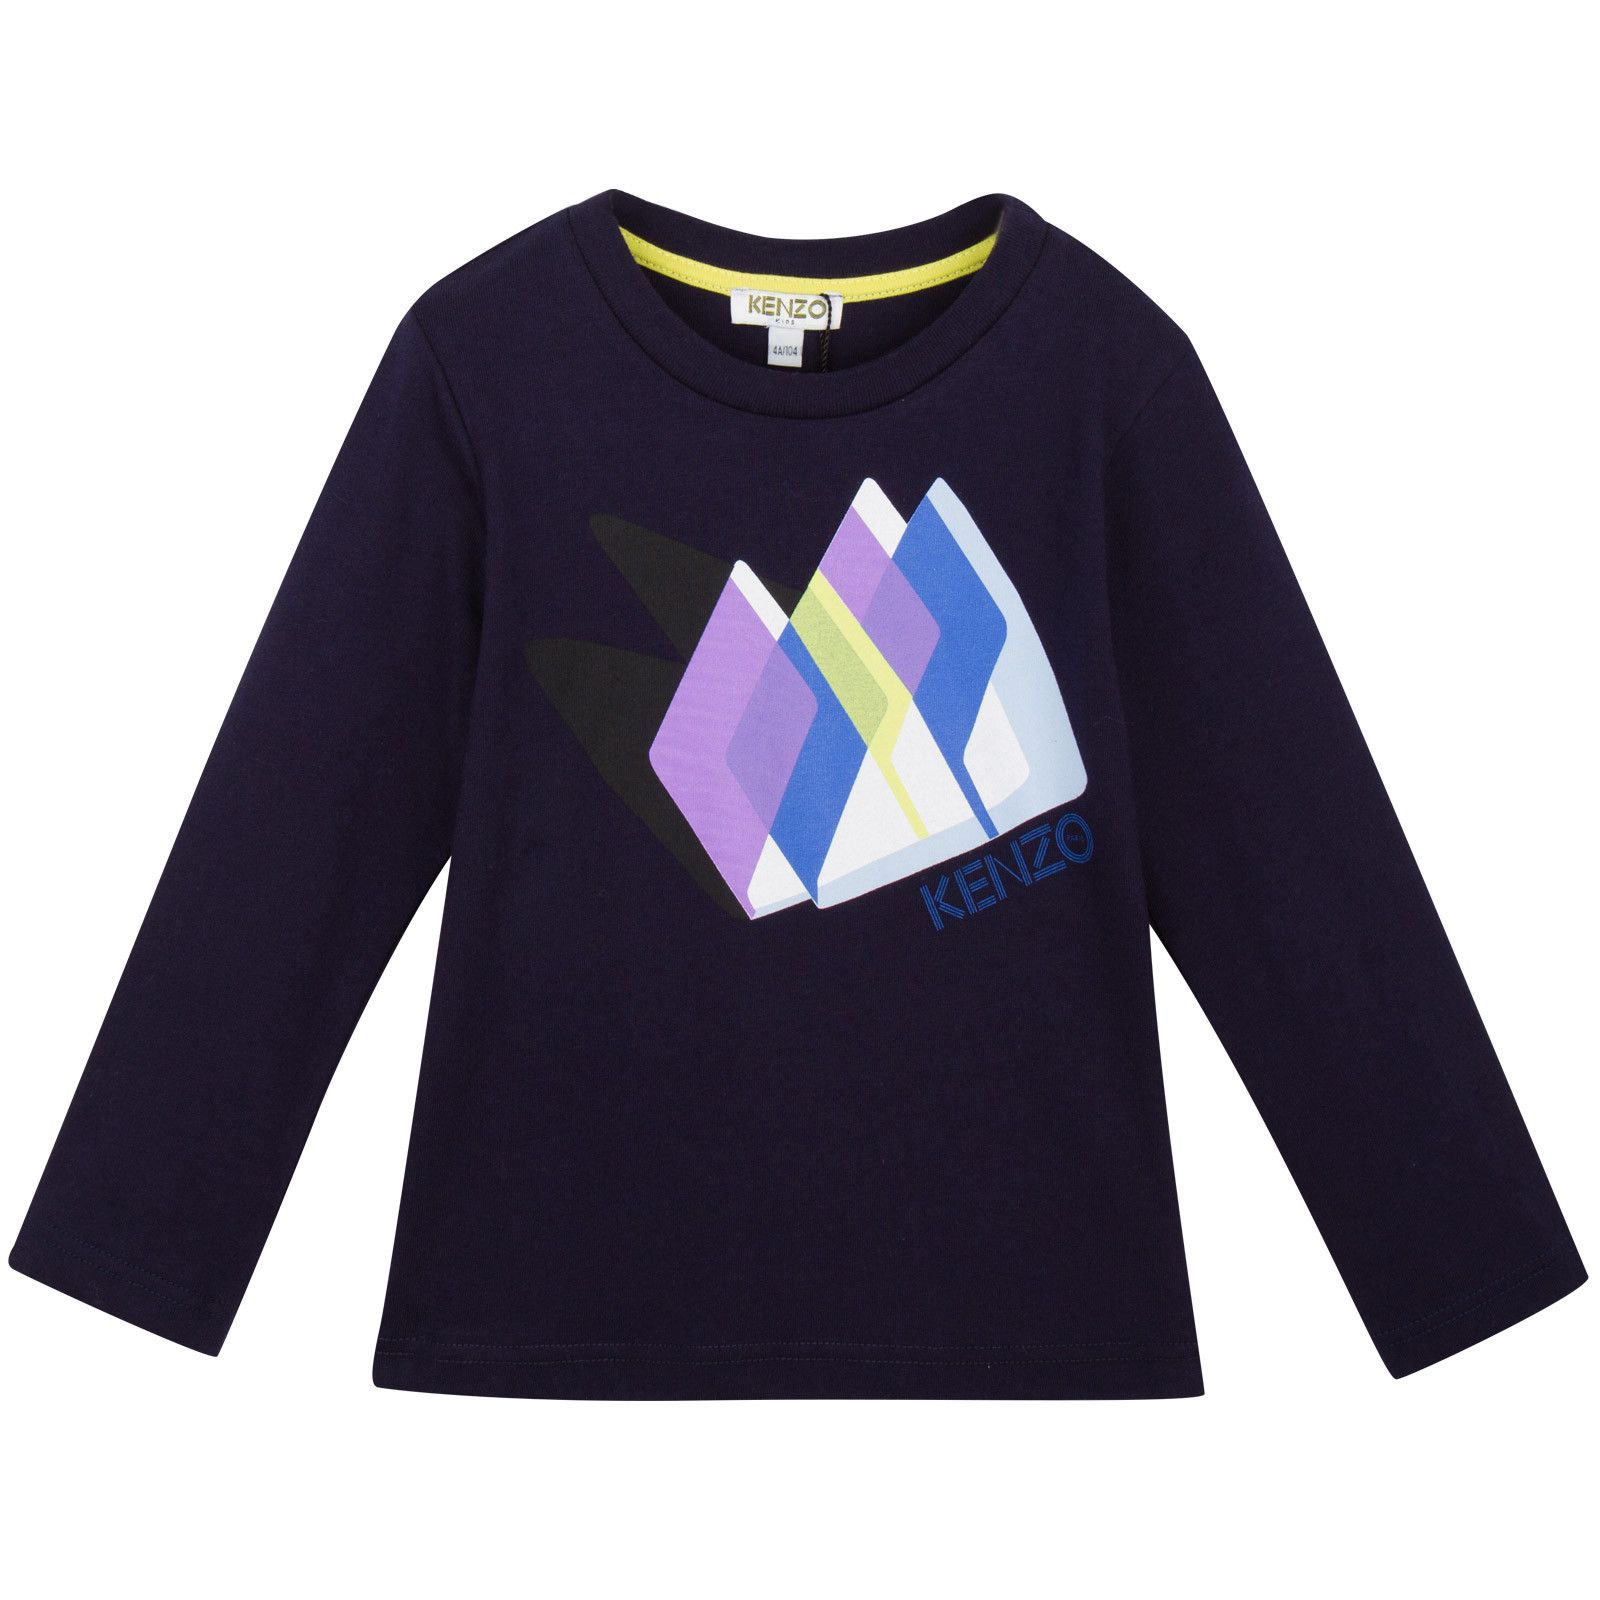 Boys Navy Blue Mountains Printed Cotton T-Shirt - CÉMAROSE | Children's Fashion Store - 1